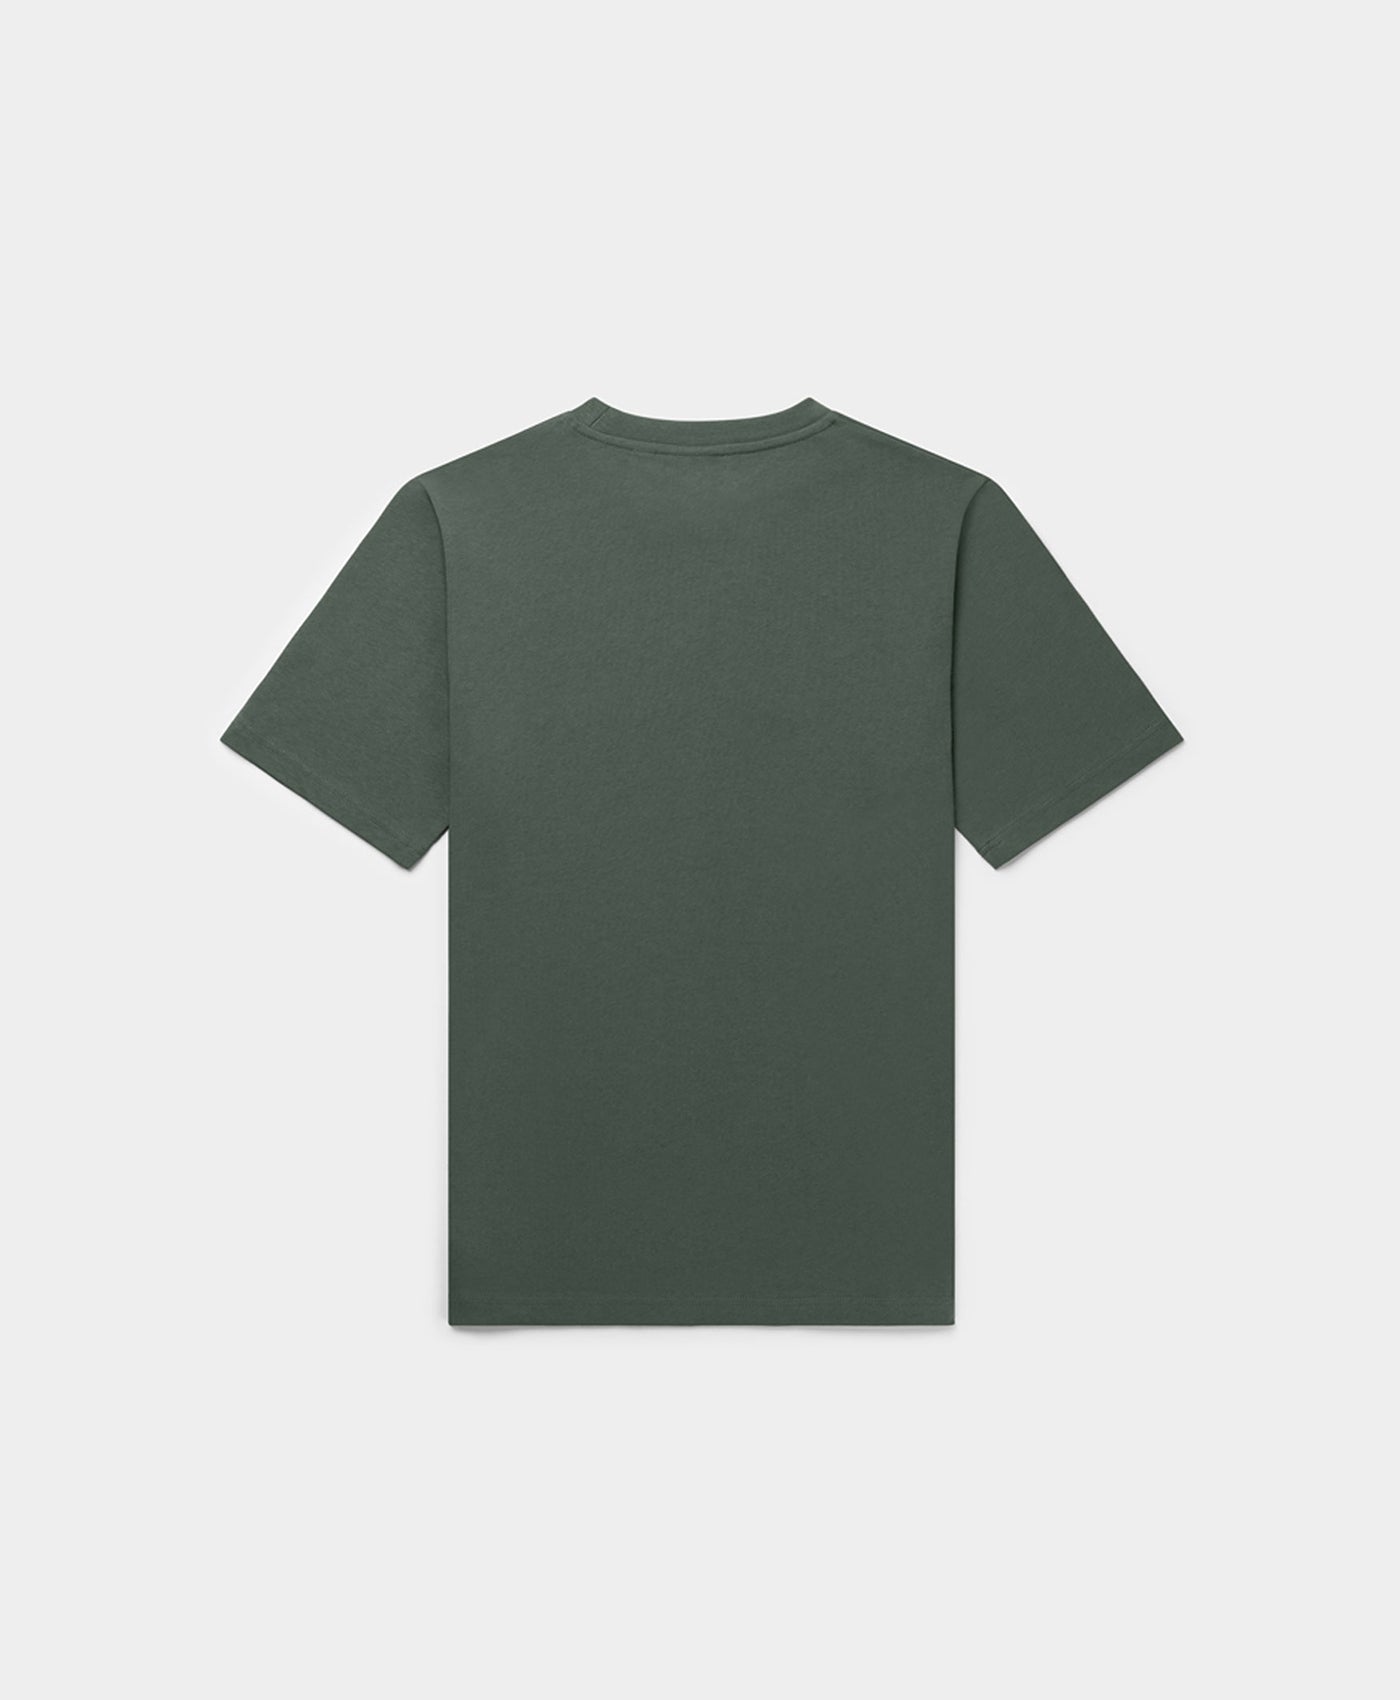 DP - Chic Green Alias T-Shirt - Packshot - Rear